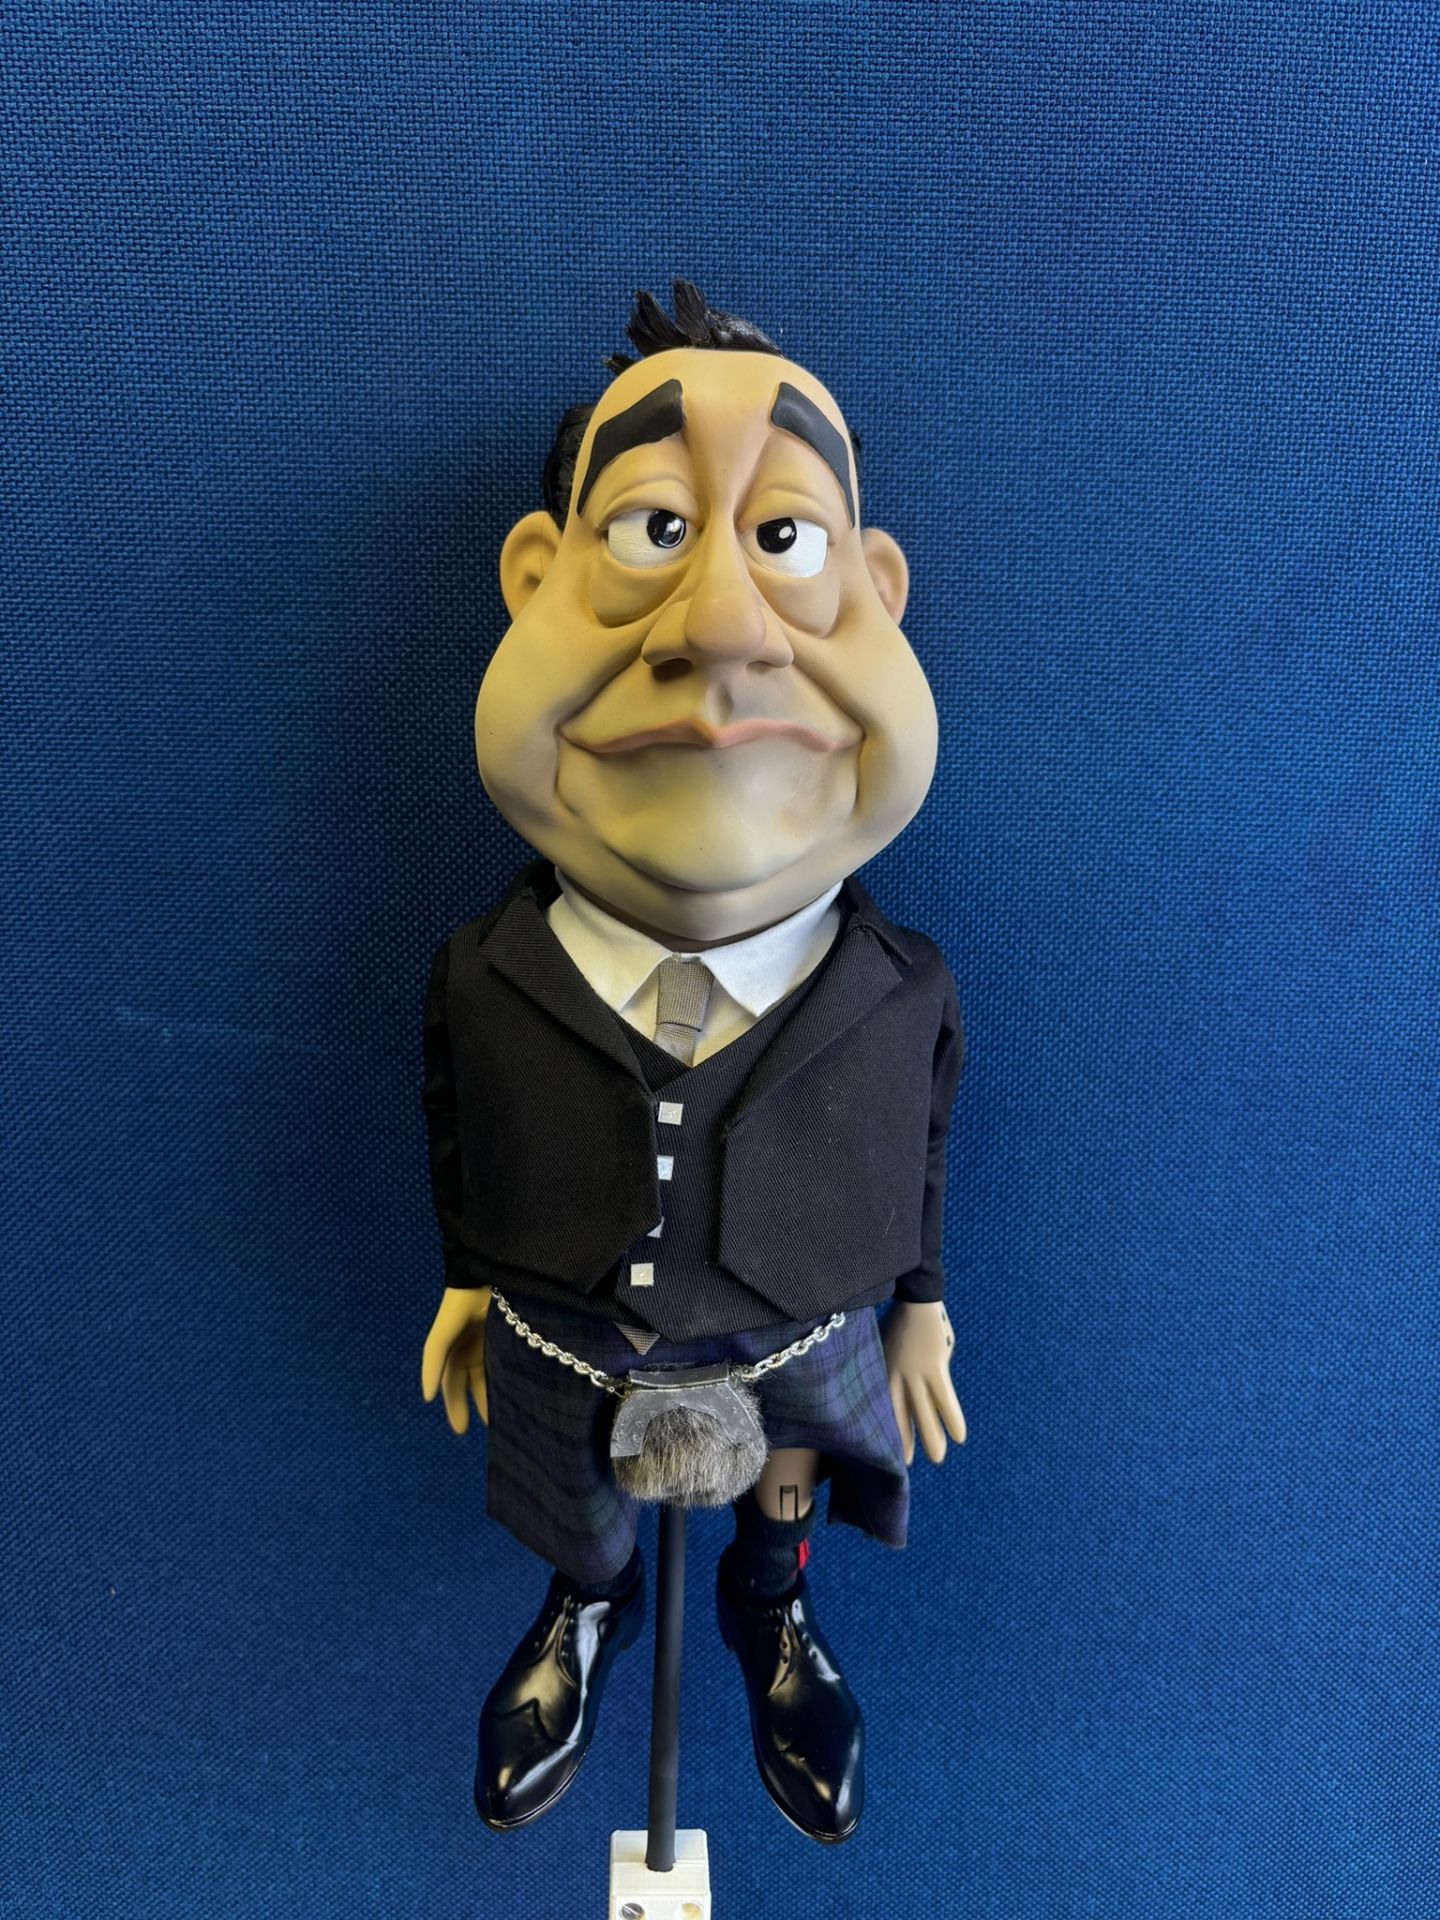 Newzoid puppet - Alex Salmond - Image 2 of 4